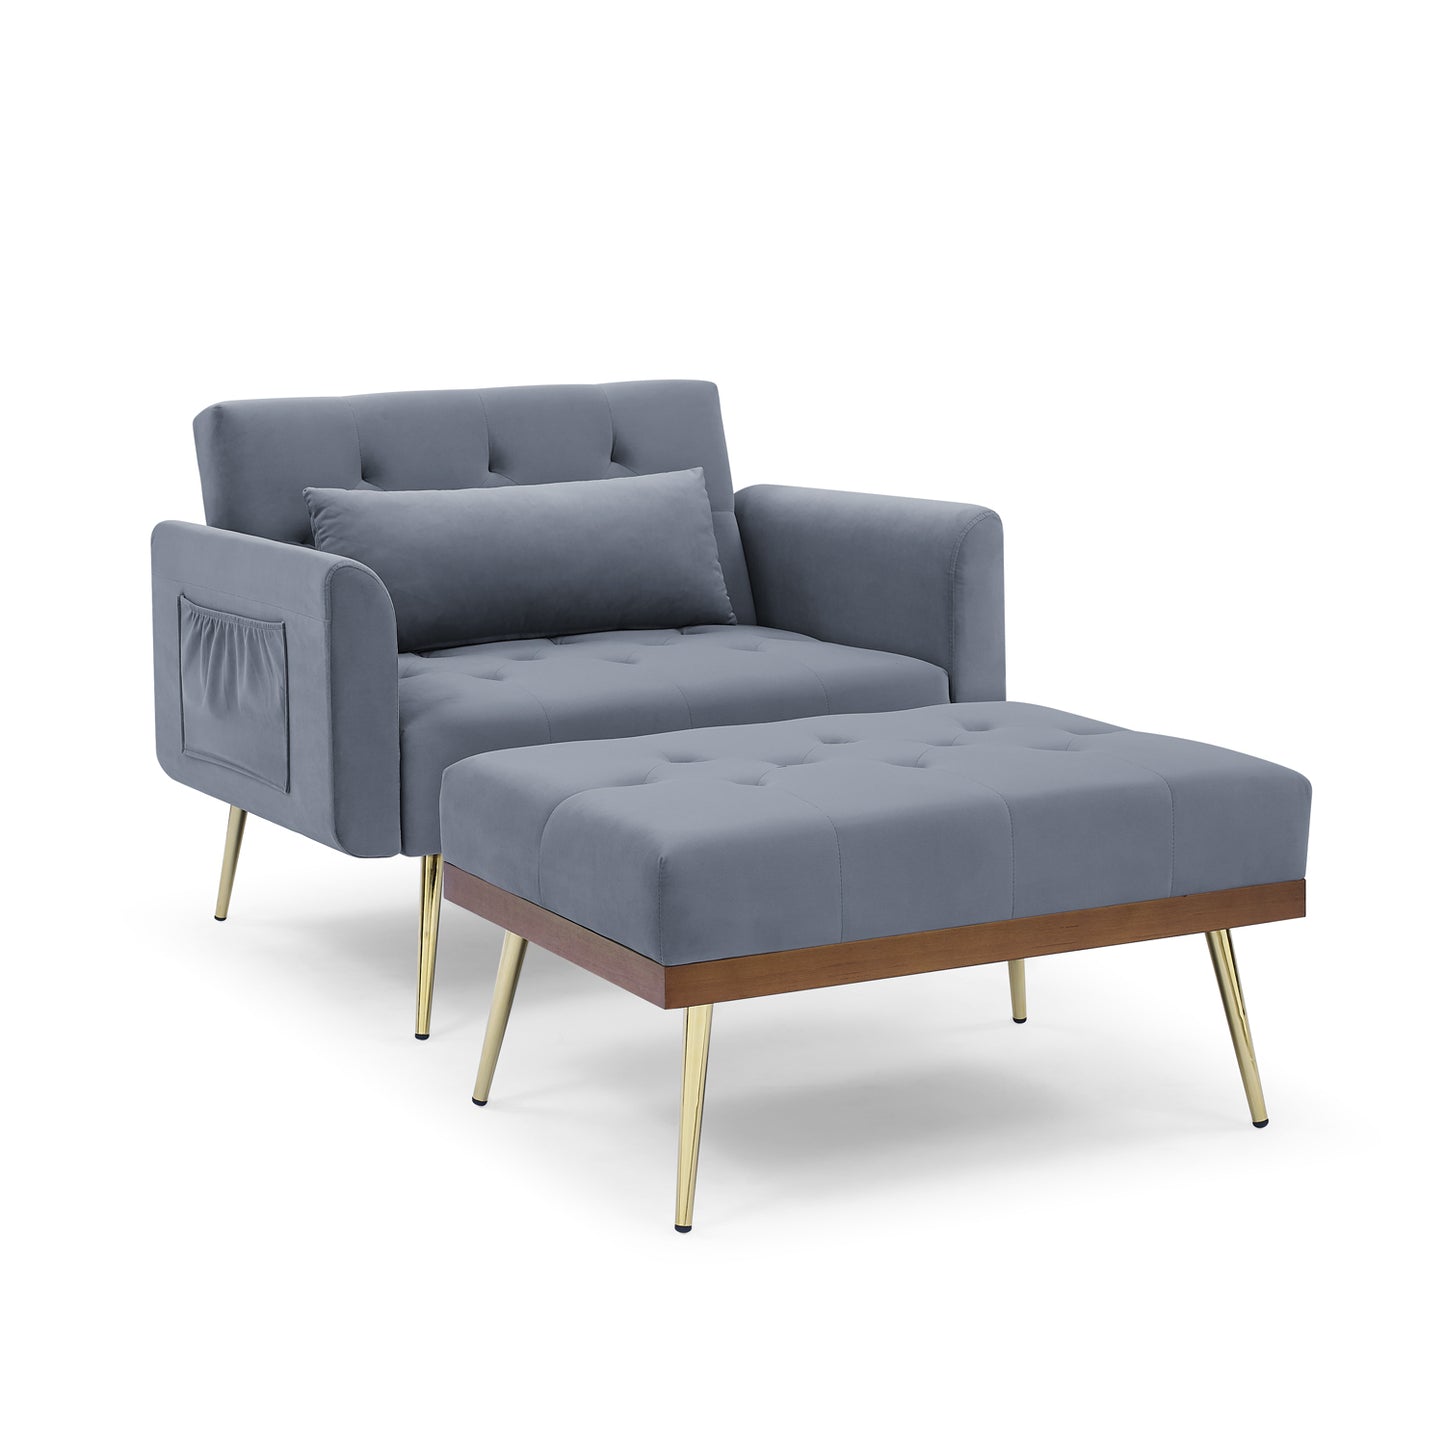 KALAN, Recline Sofa Chair with Ottoman and Pillow, Grey